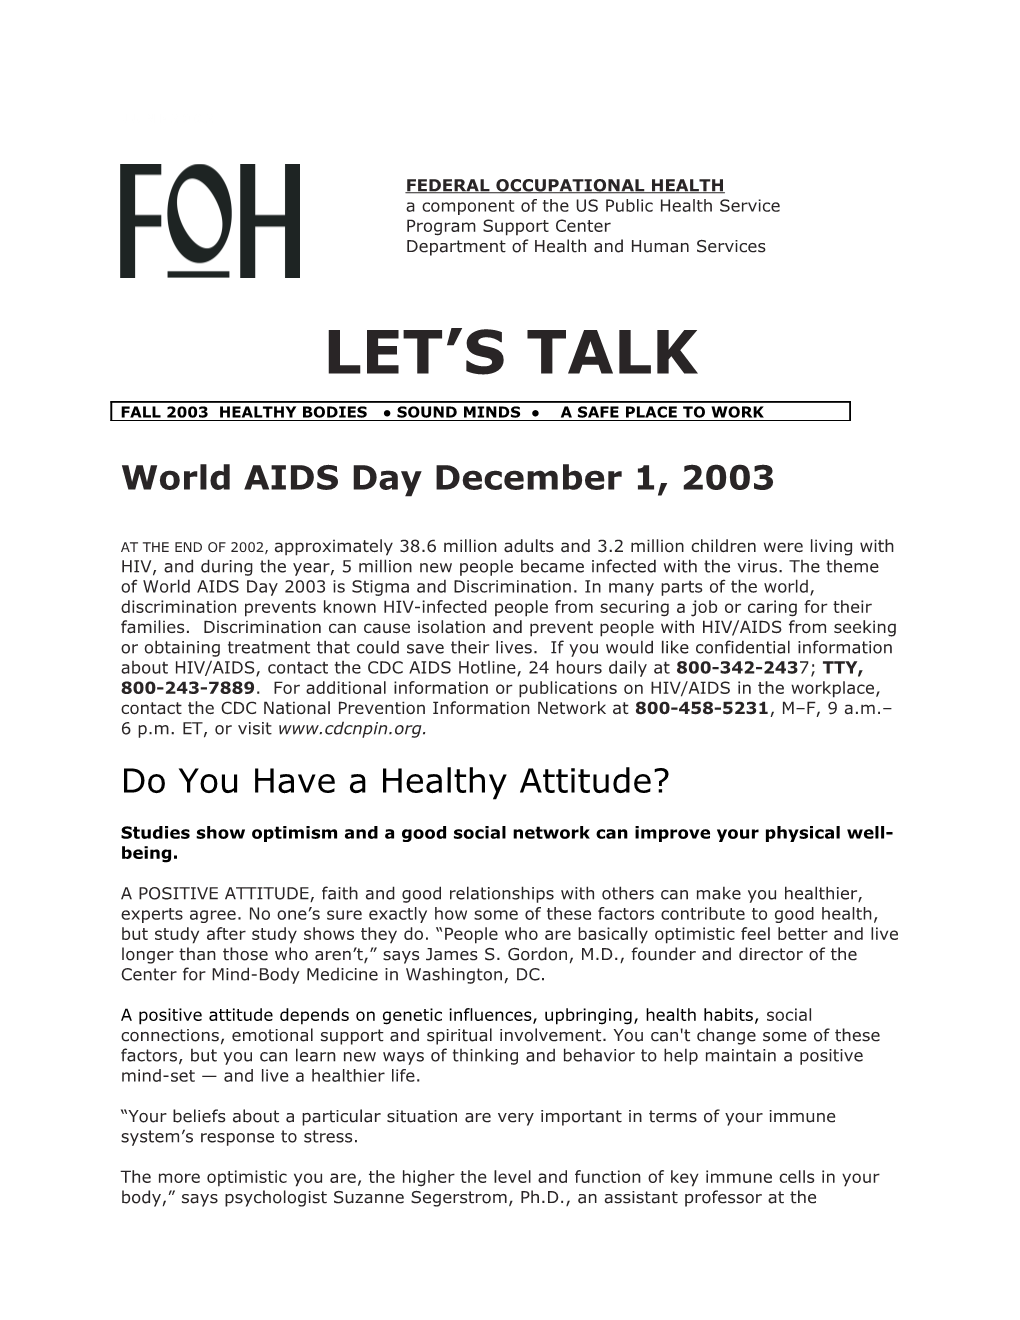 World AIDS Day December 1, 2003